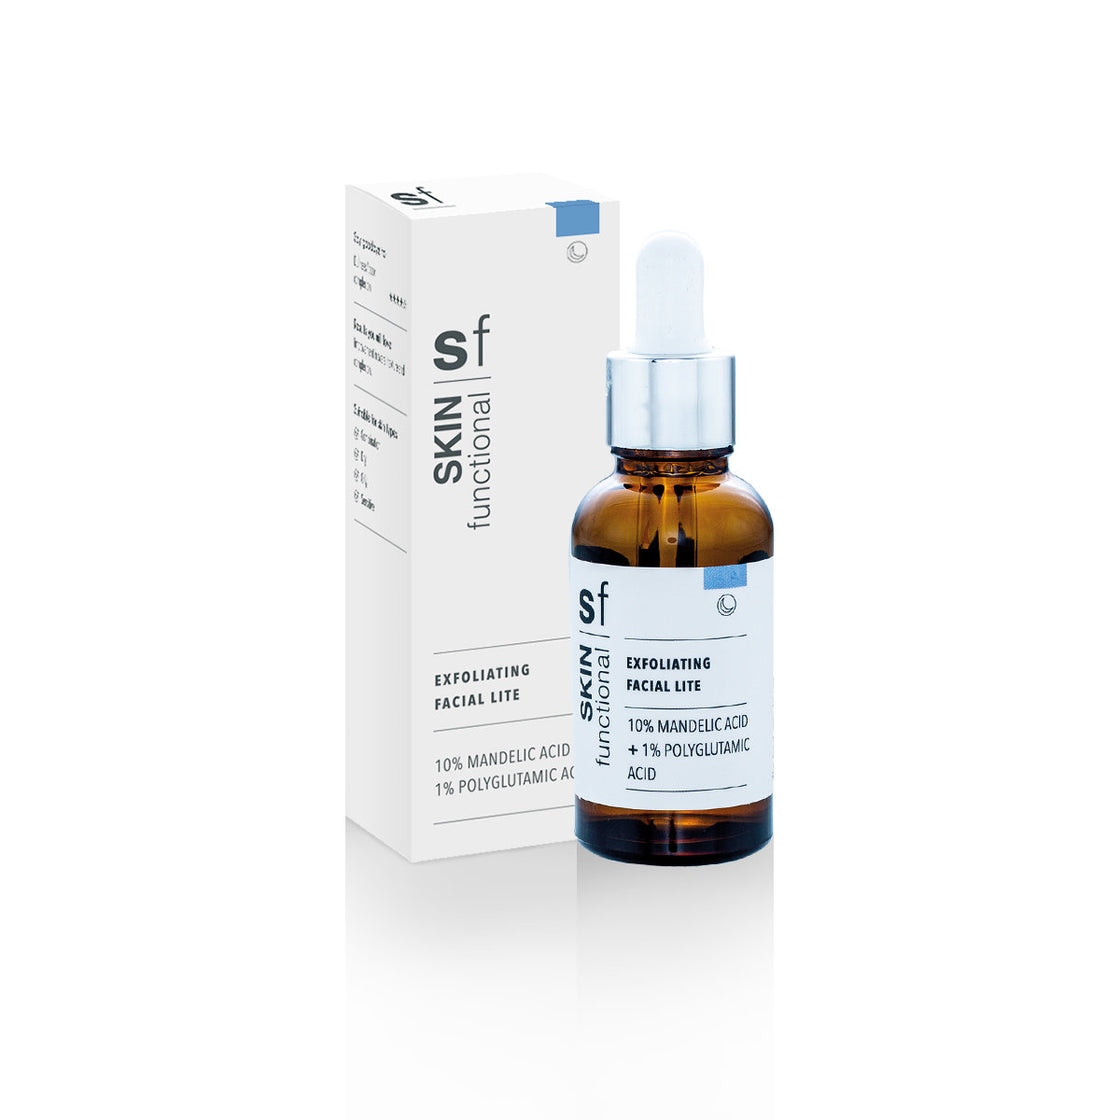 SKIN Functional Exfoliating Facial Lite| 10% Mandelic Acid + 1% Polyglutamic Acid